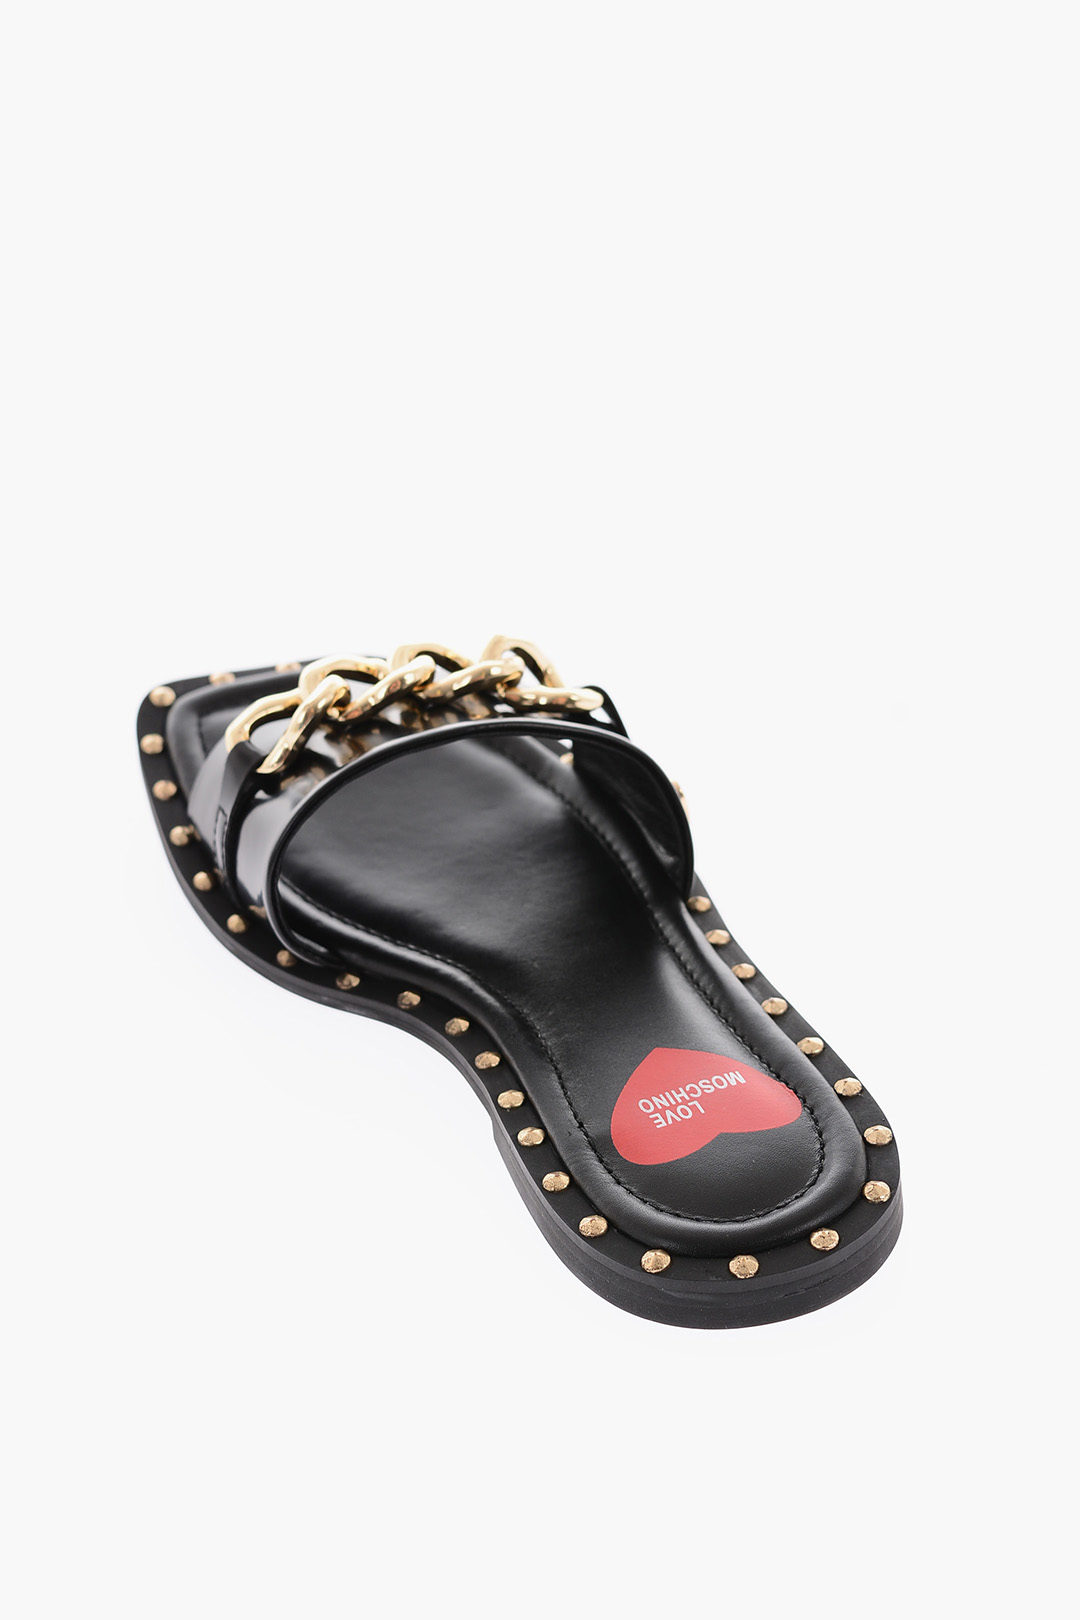 Bekræftelse form nyheder Moschino LOVE Golden Studs and Chain FLAT15 Sandals women - Glamood Outlet